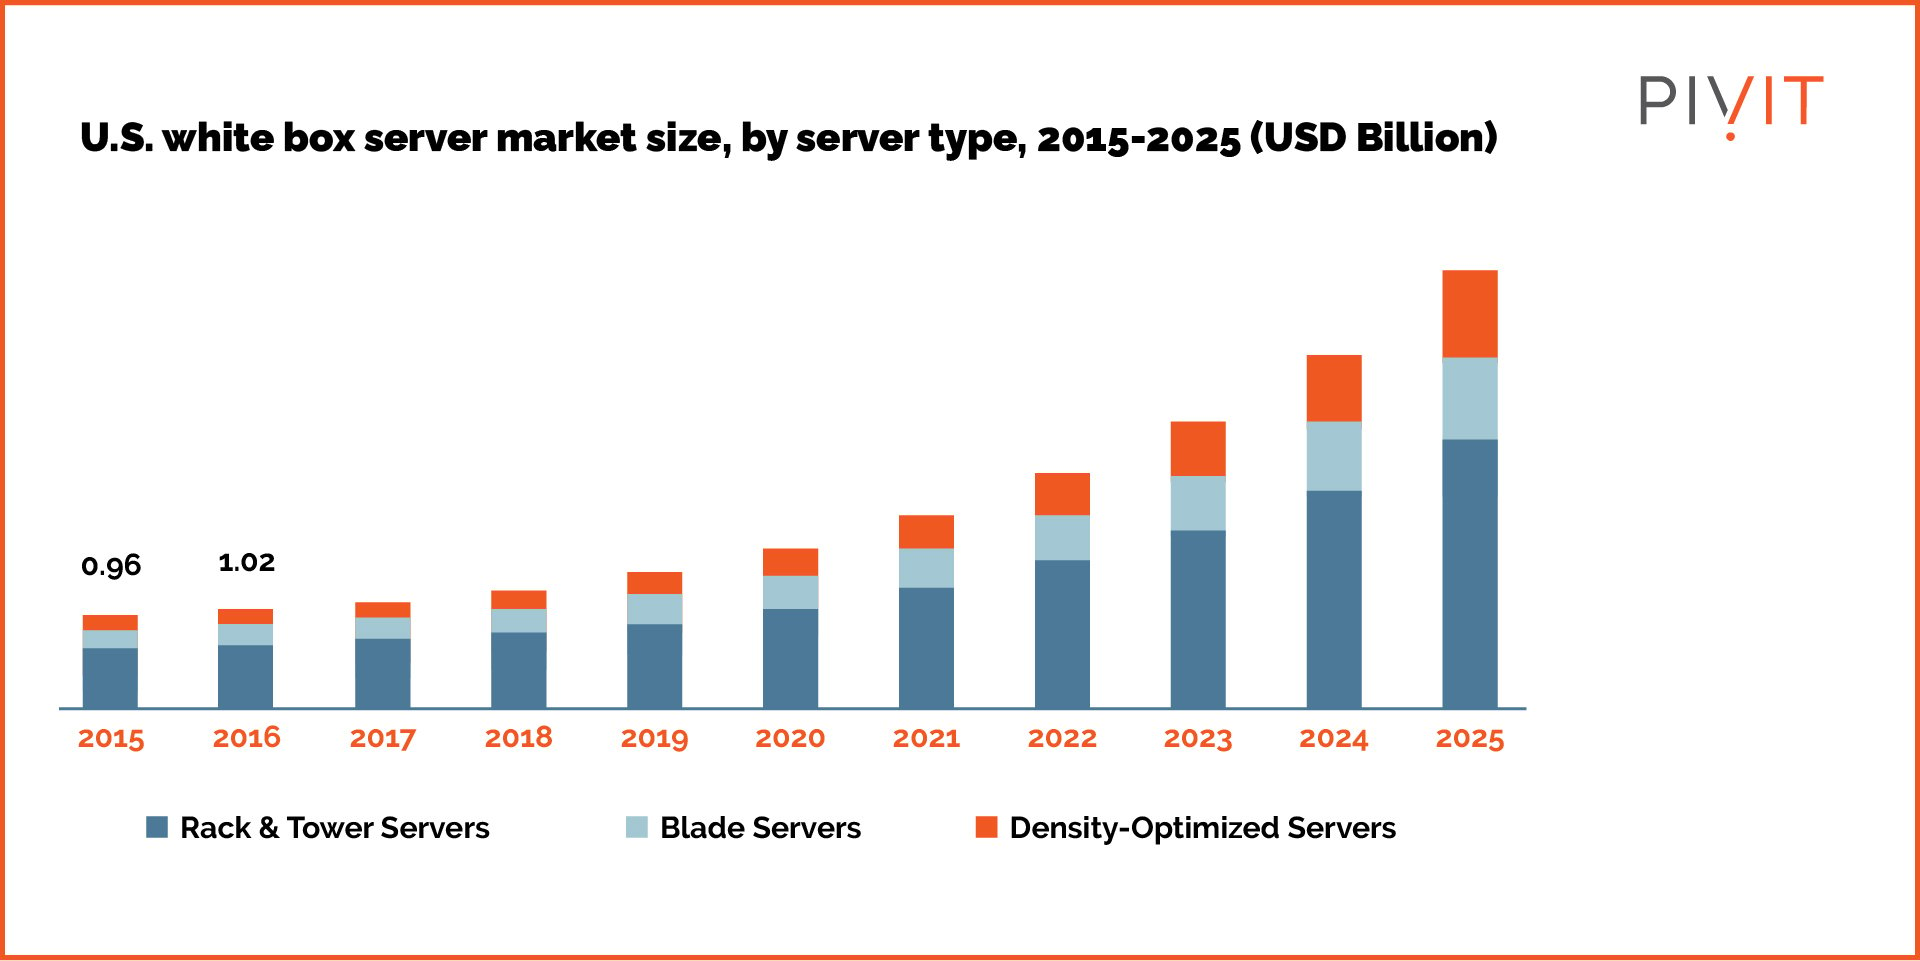 US white box server market size, by server type, 2015-2025 (USD billion)